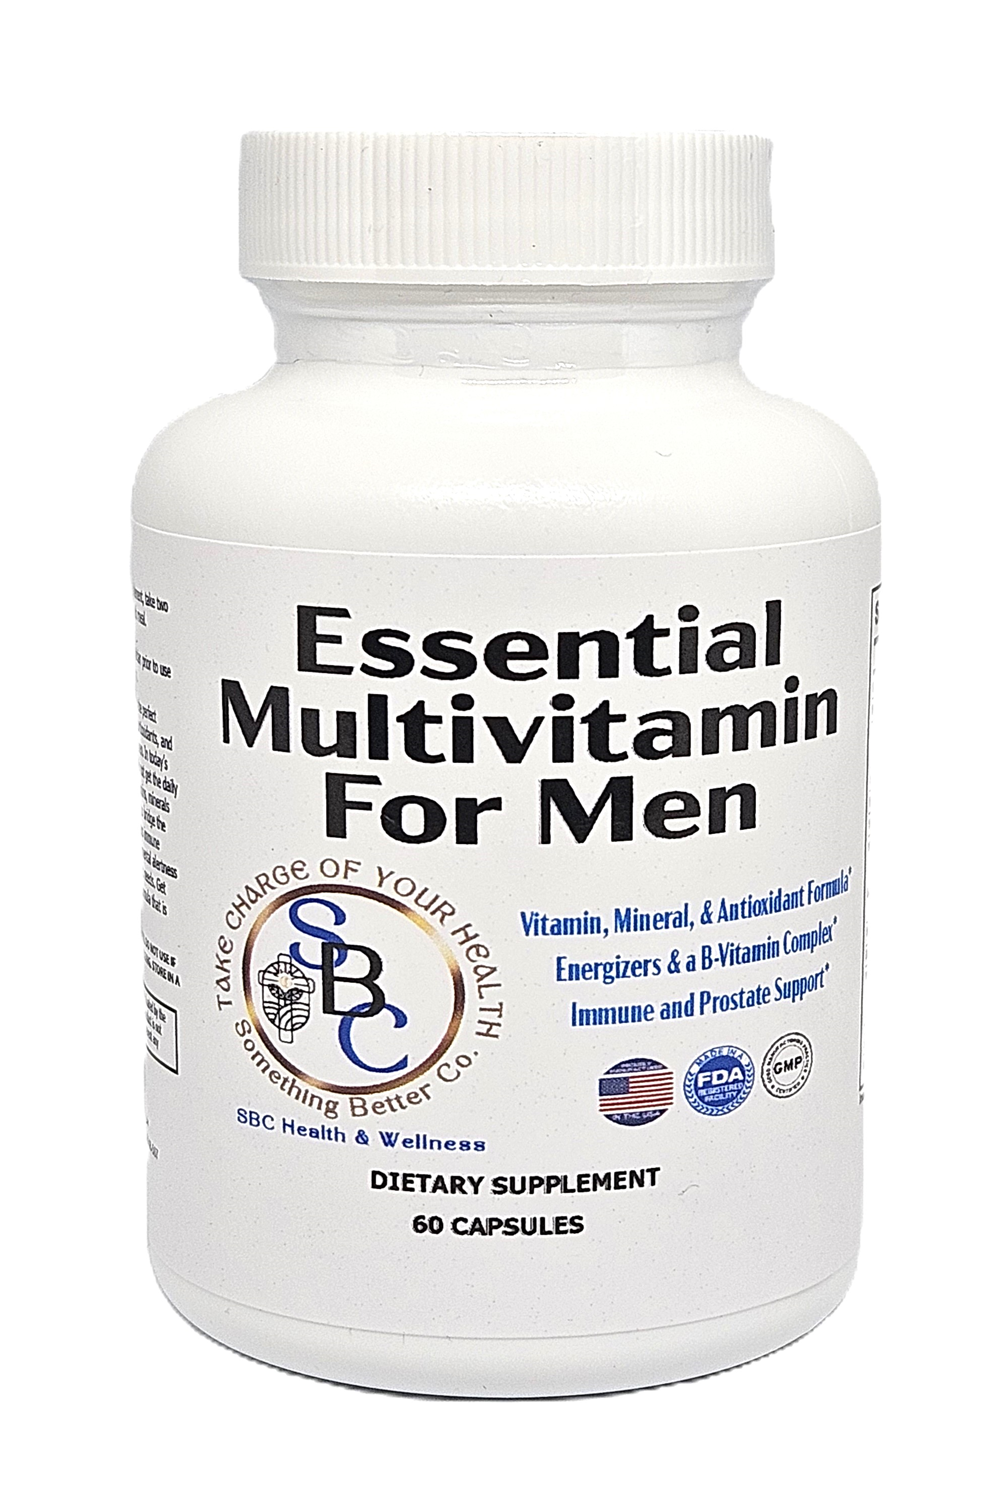 Multivitamin Vitamin Supplements for Men - 60 Capsules